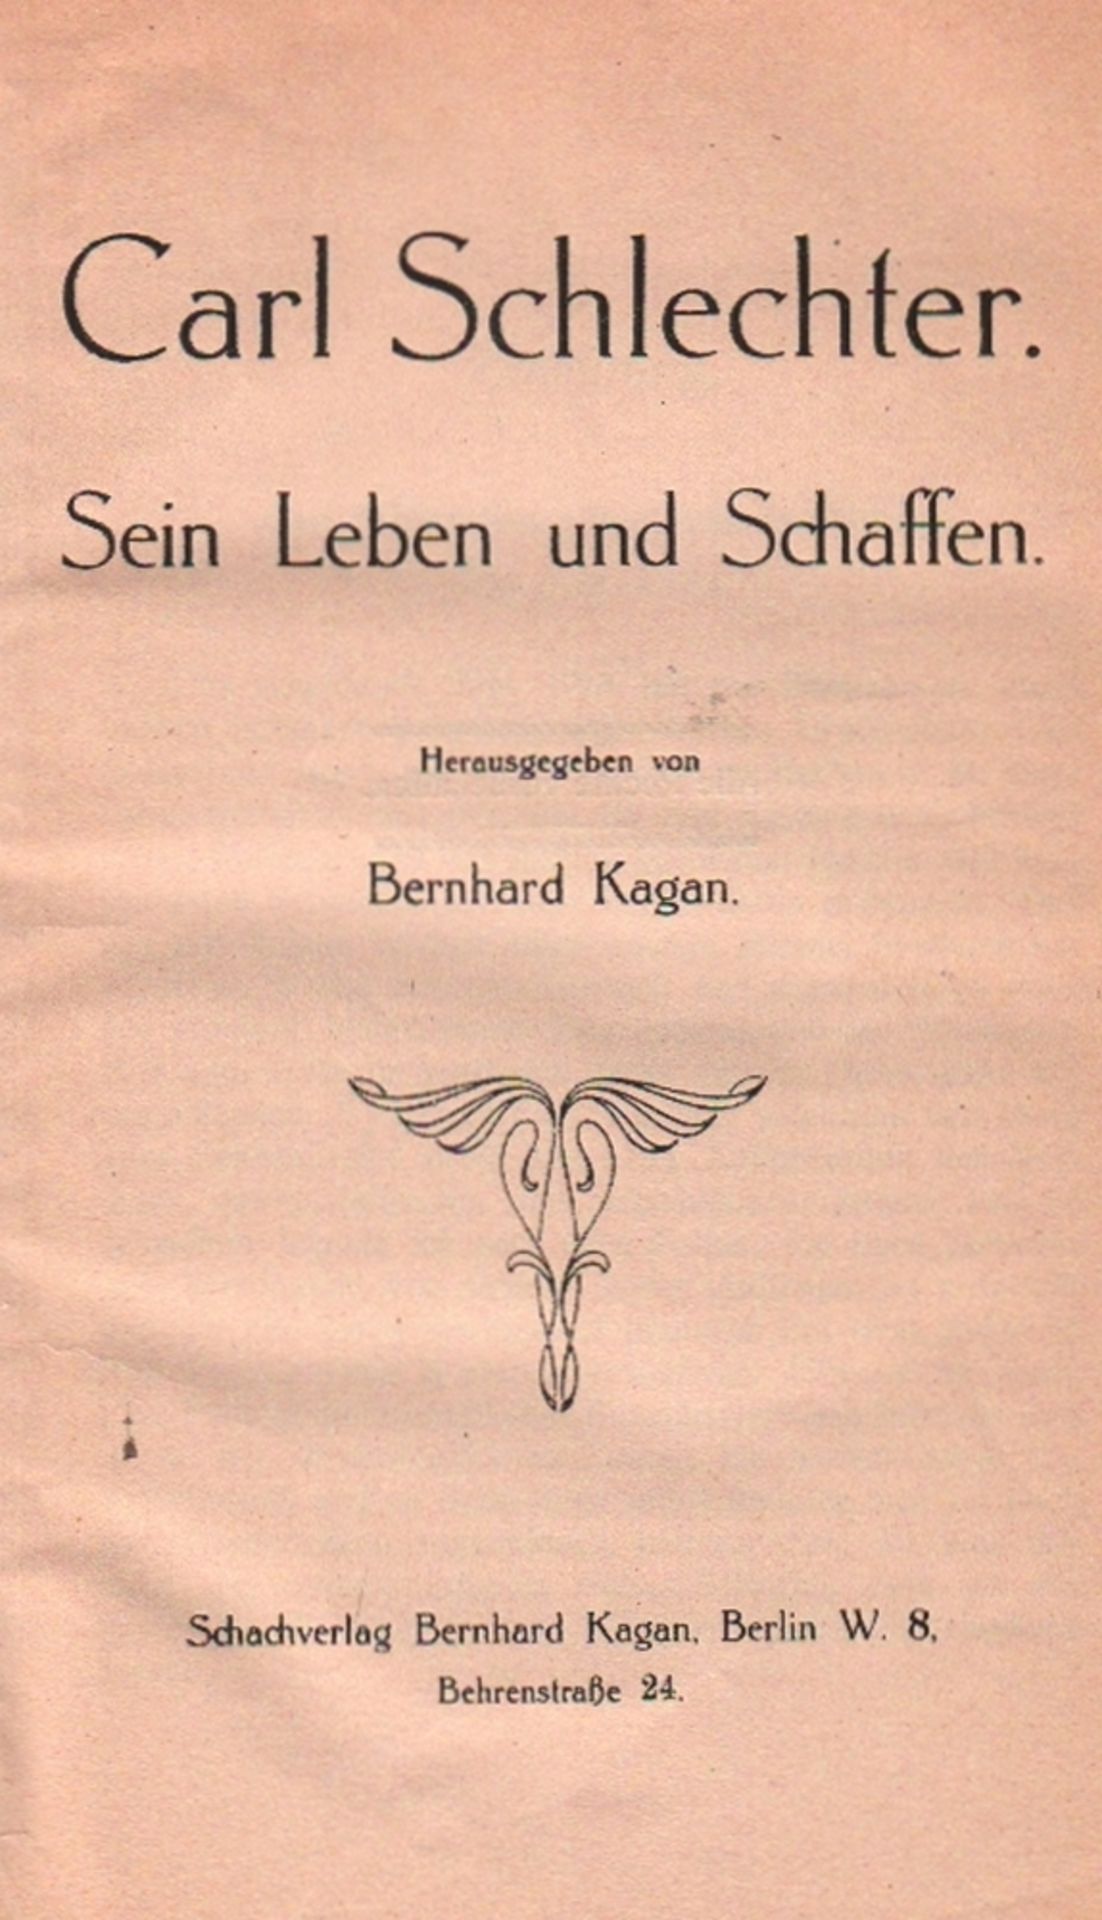 Schlechter. Kagan, Bernhard. (Hrsg.) Carl Schlechter. Sein Leben und Schaffen. Berlin, Kagan, (